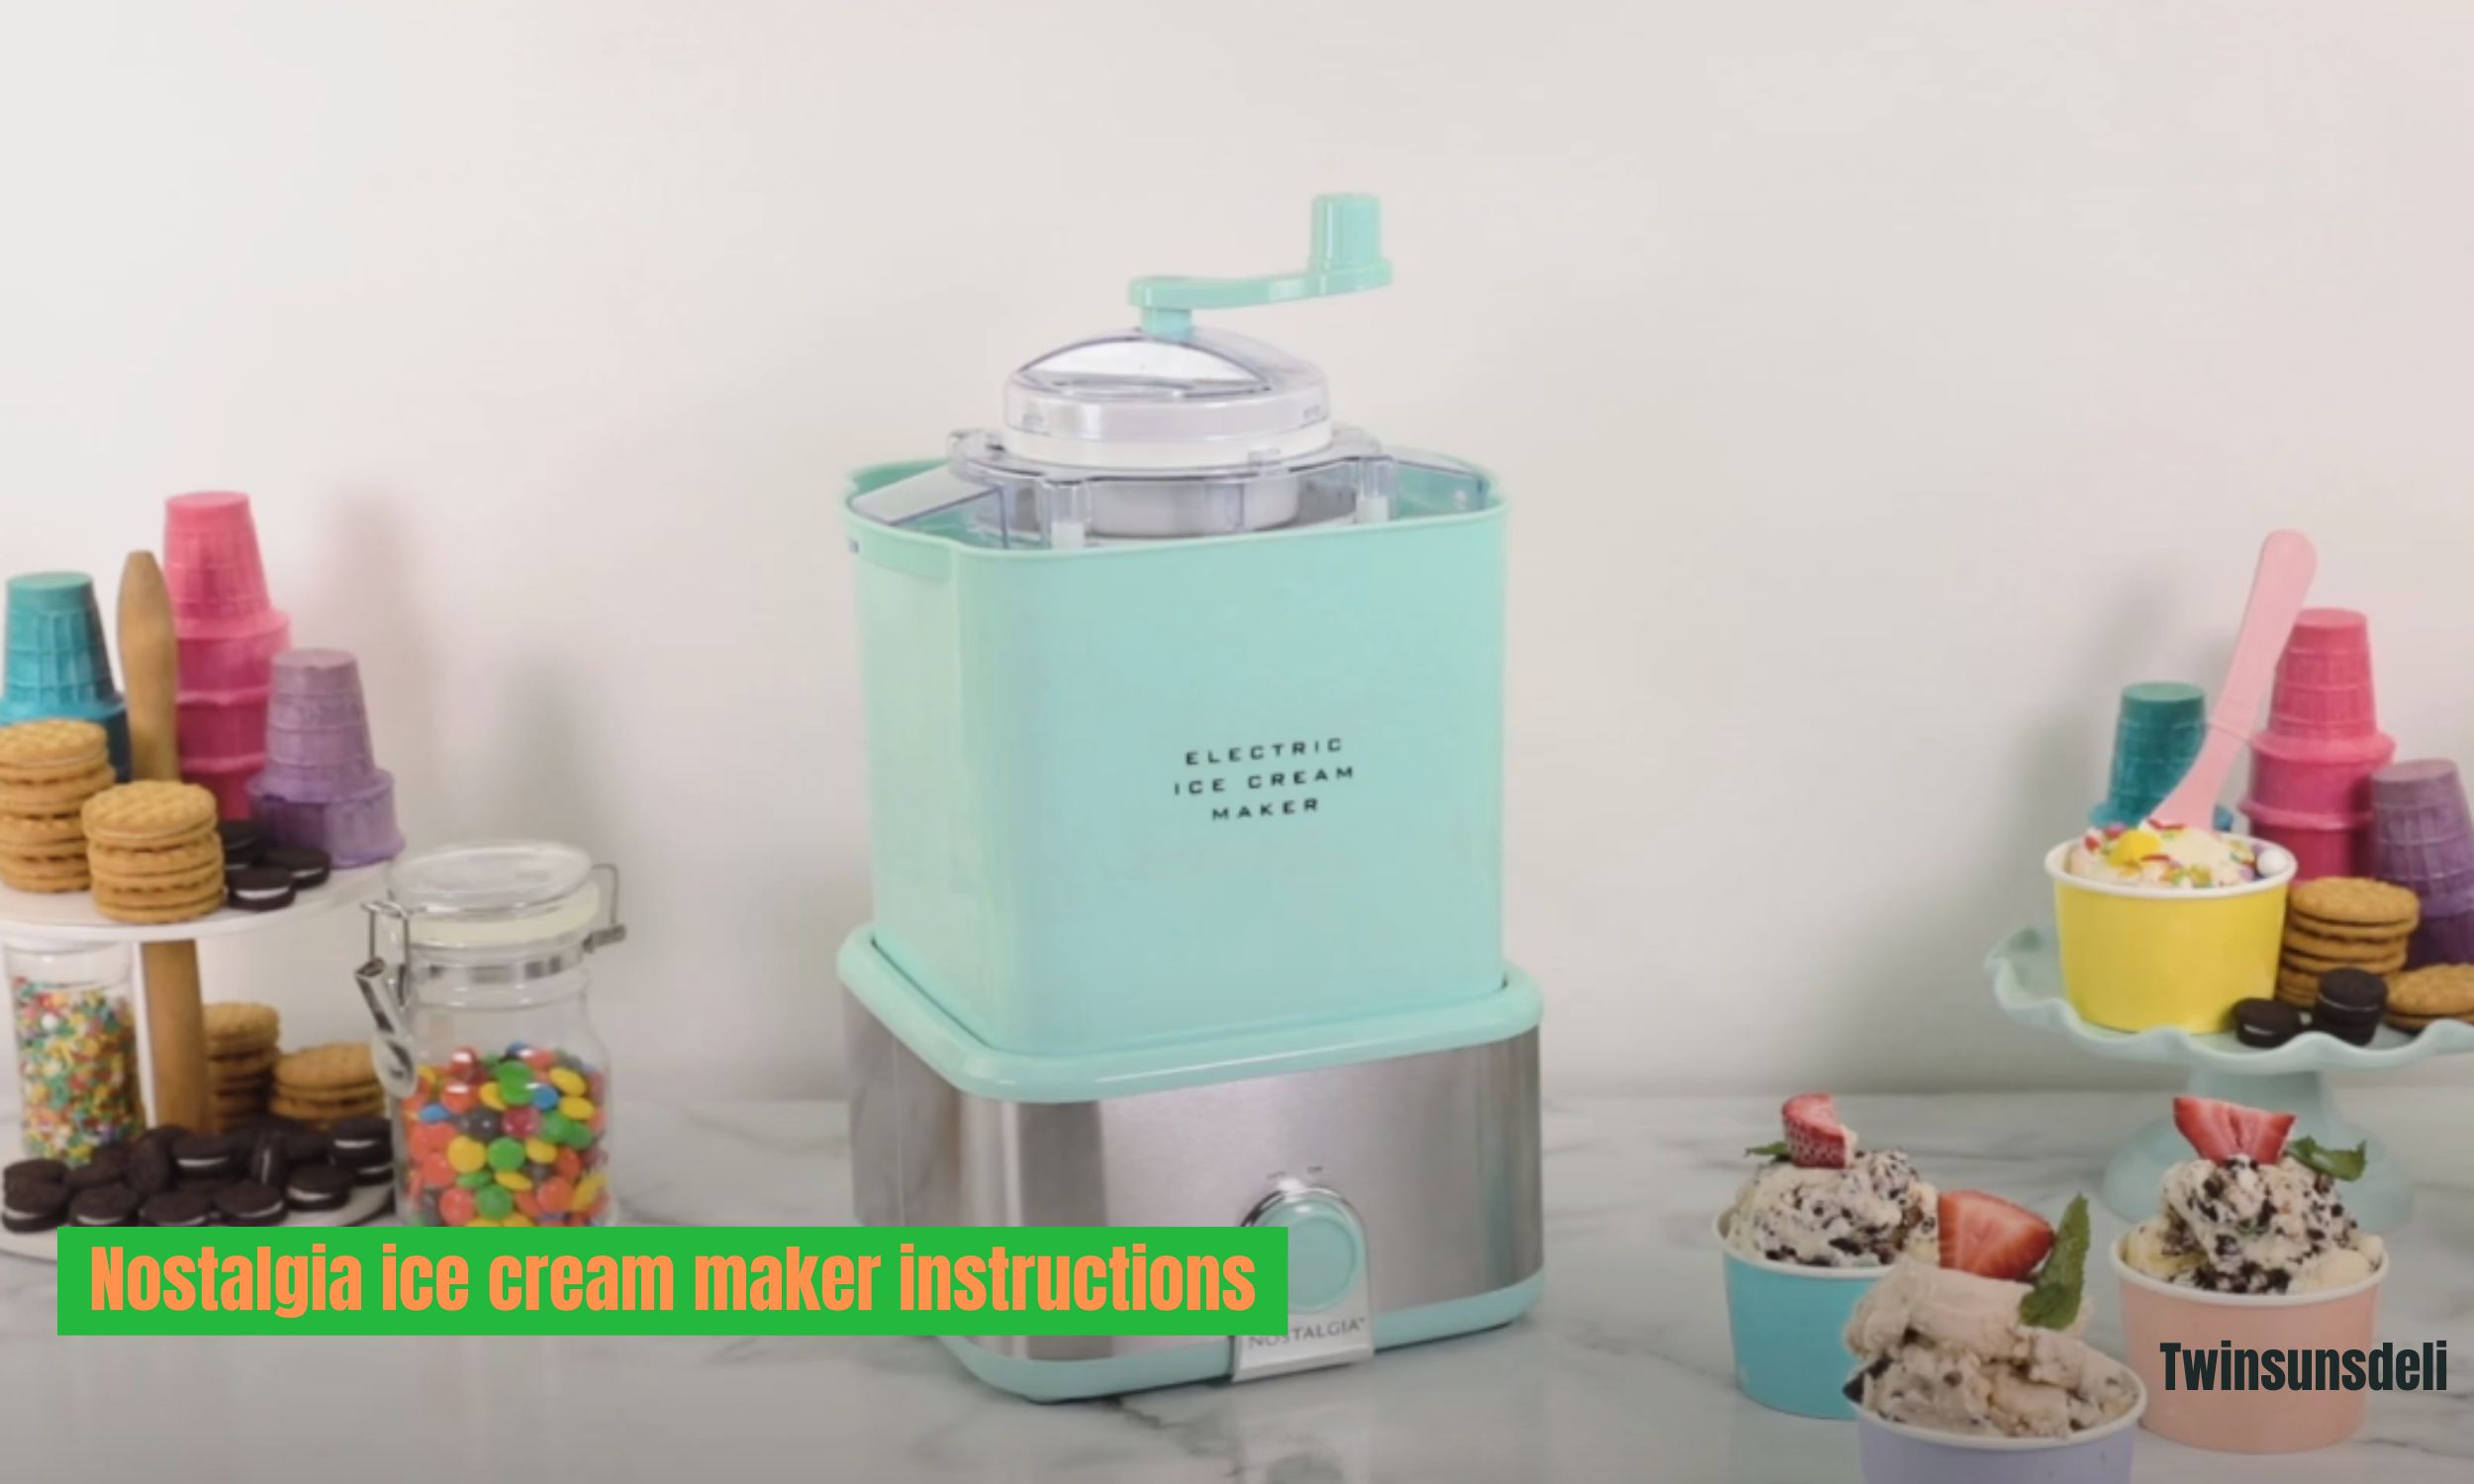 Nostalgia ice cream maker instructions